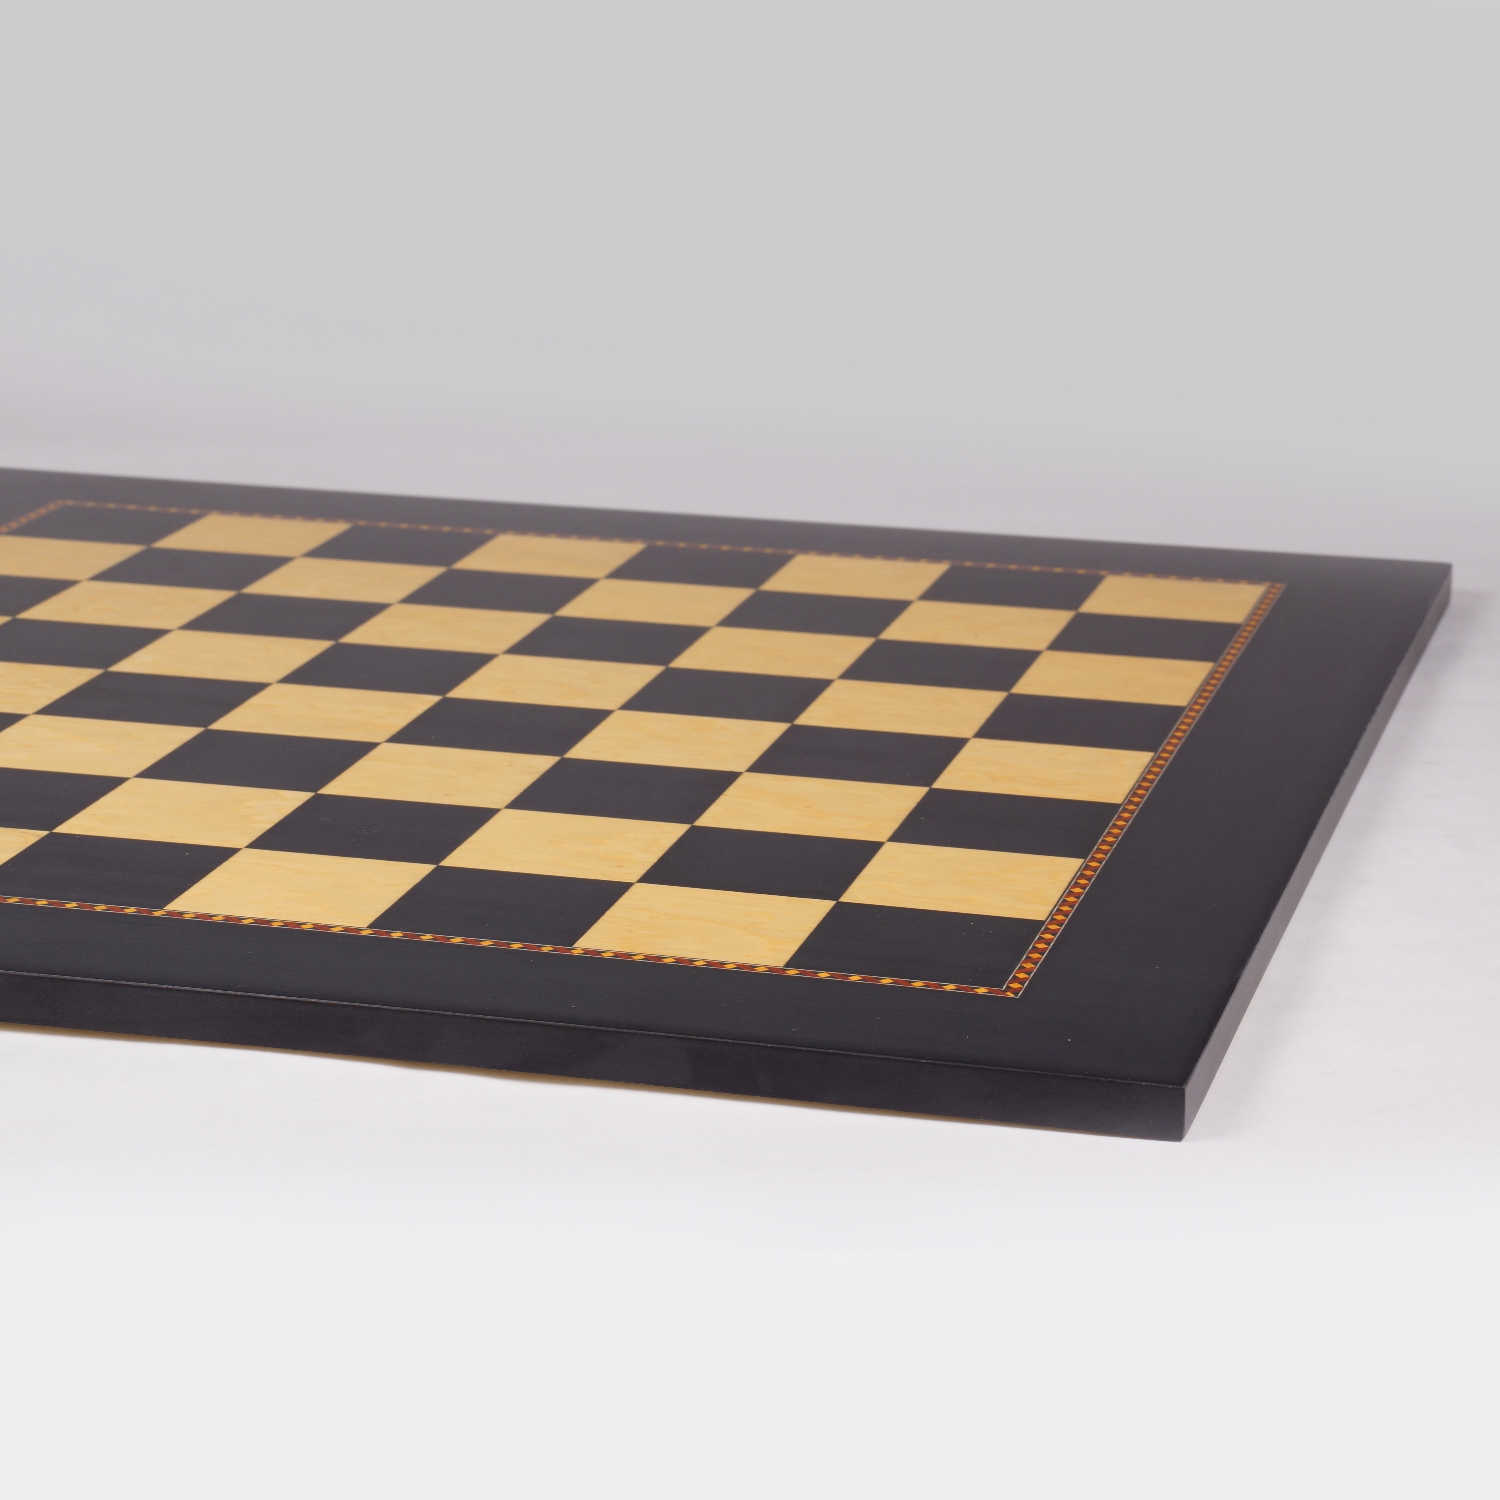 The Queen's Gambit Chess Board